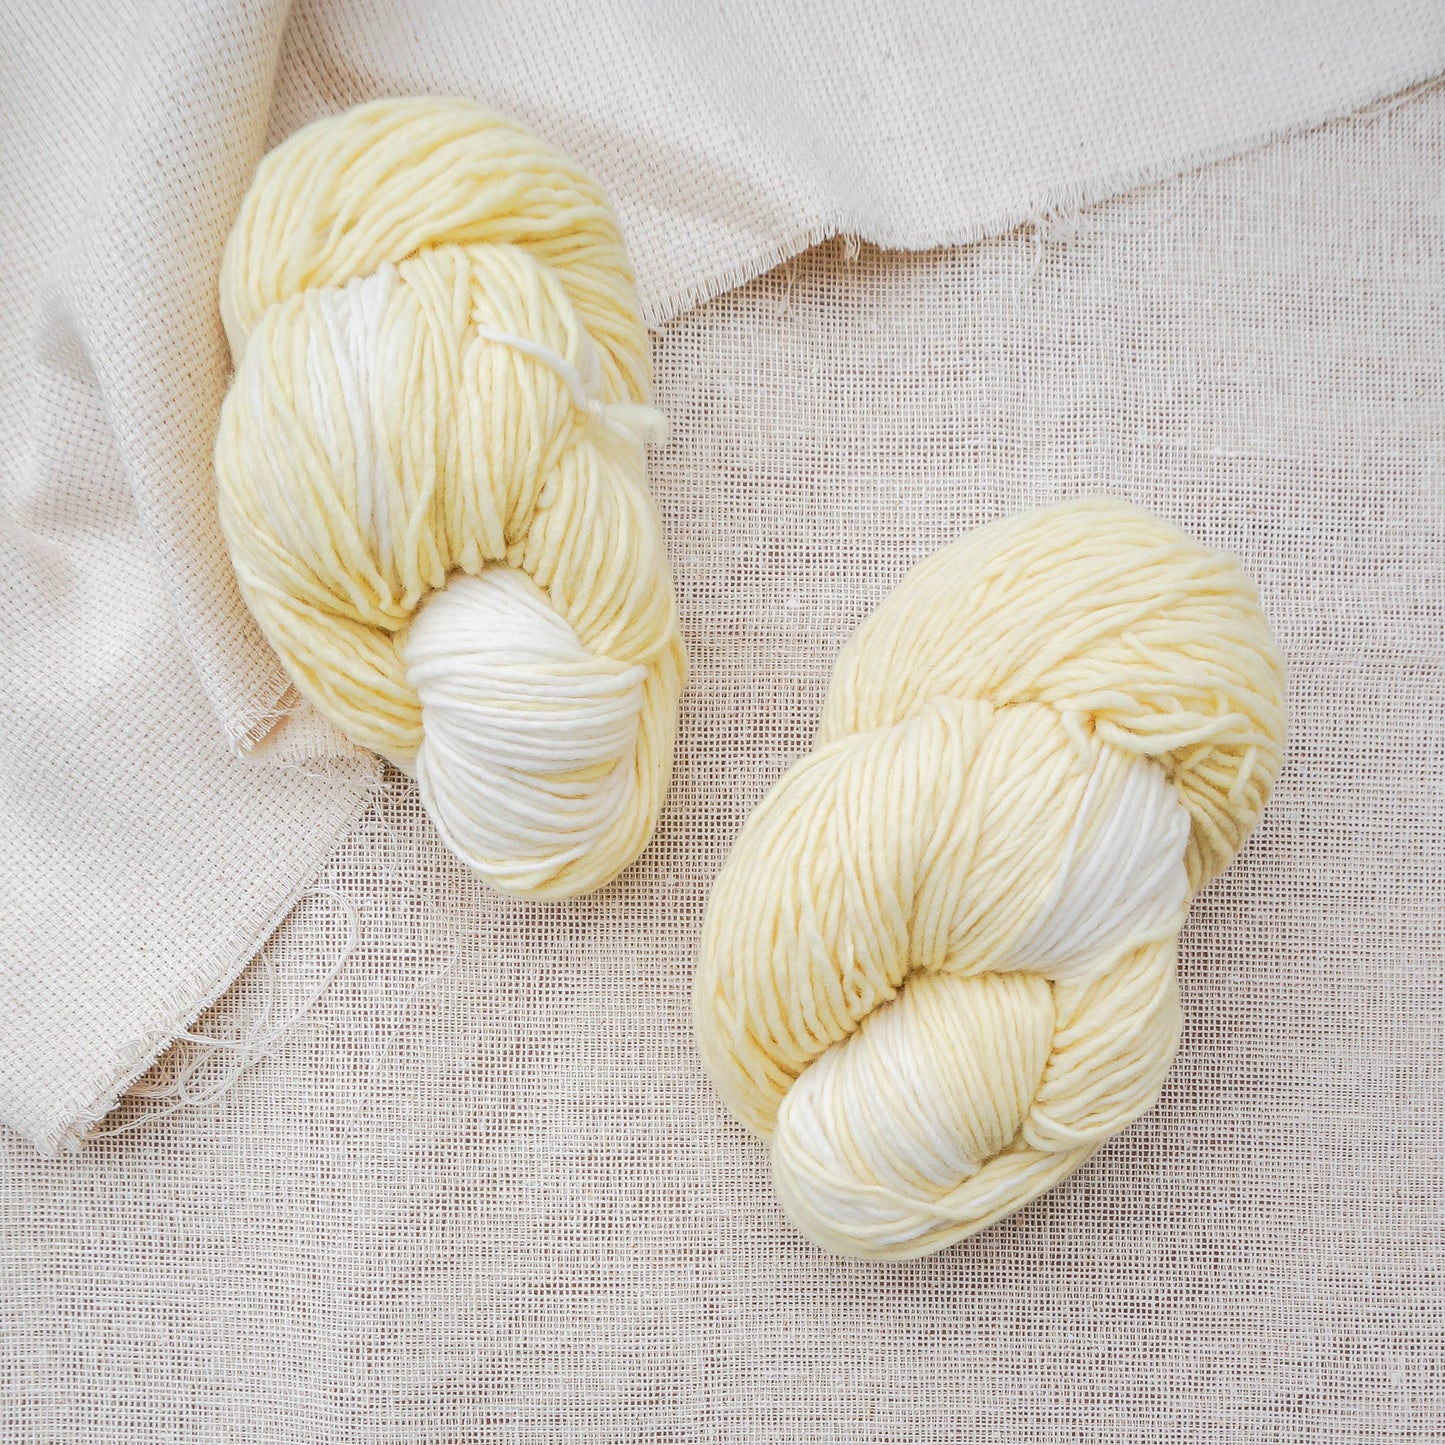 Maki Yarn, 100% wool hand-dyed with botanicals